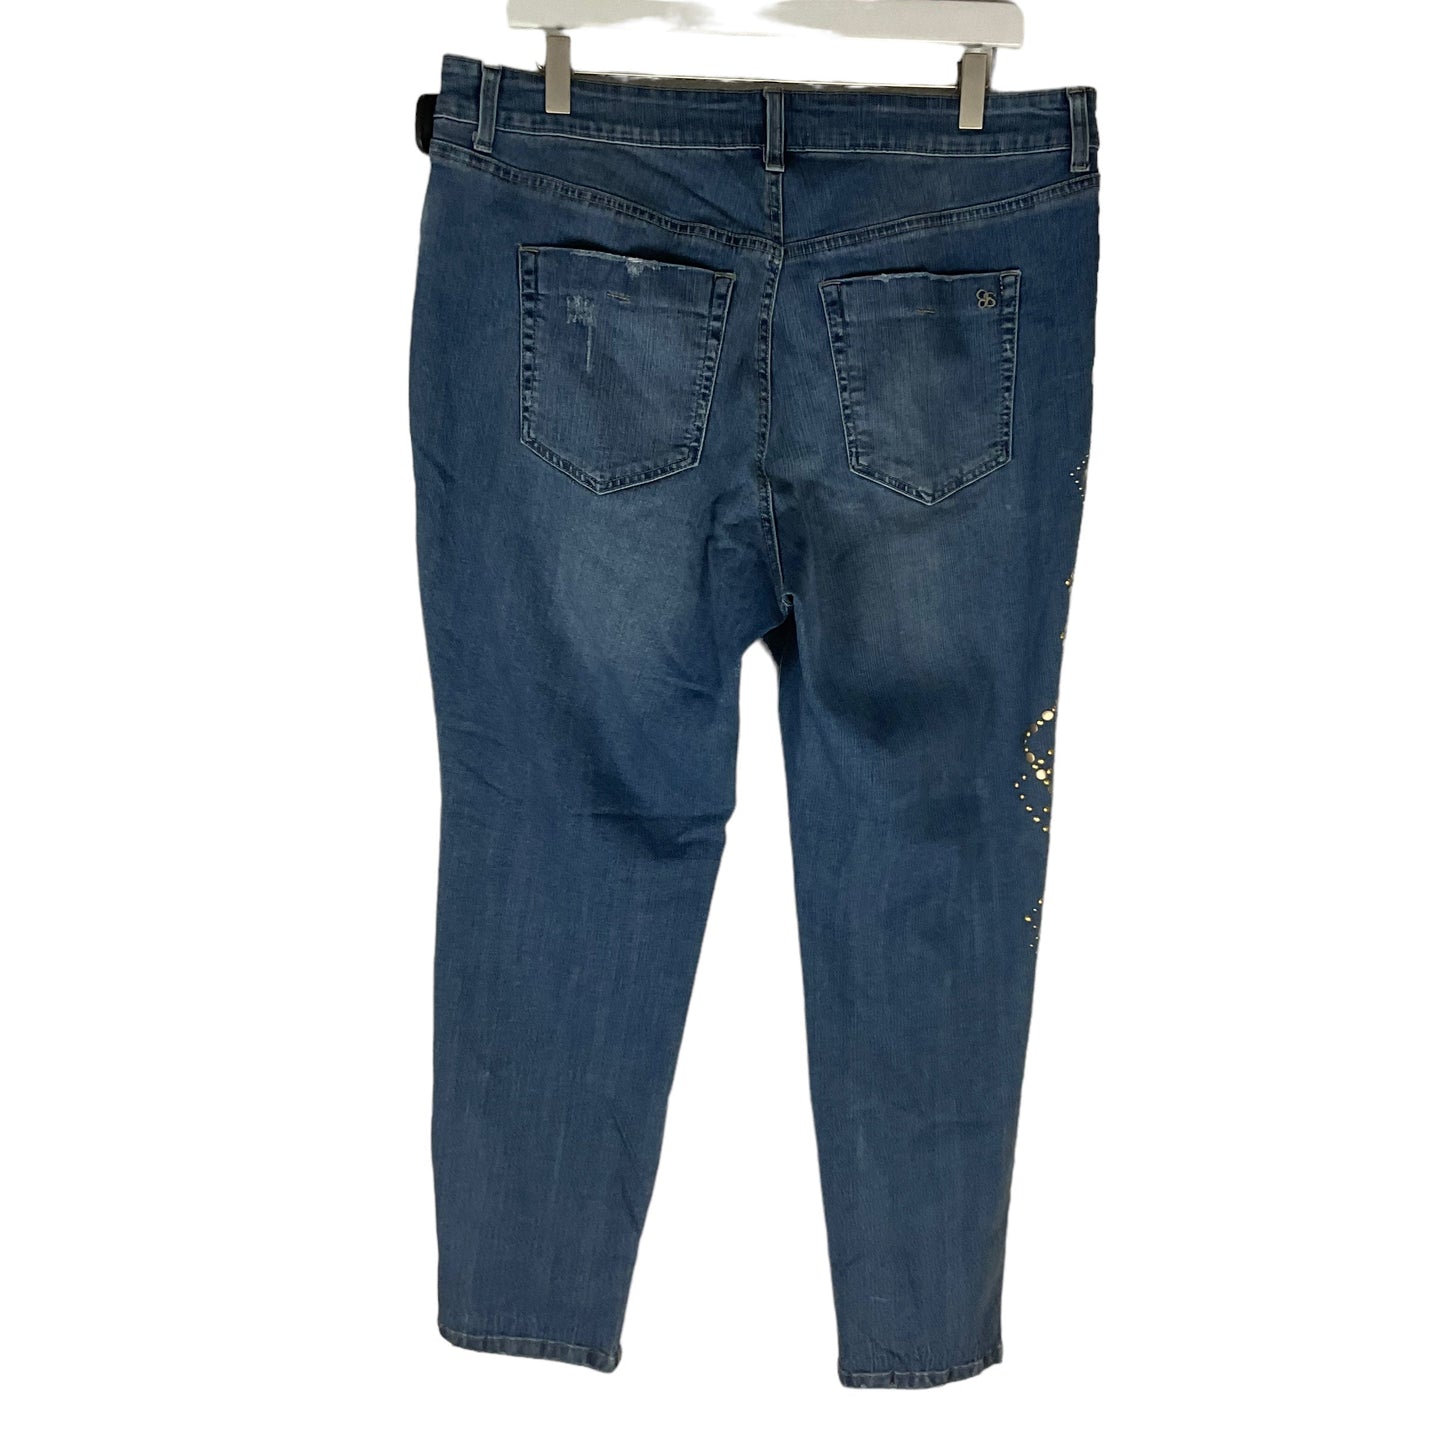 Jeans Skinny By Jessica Simpson  Size: 14